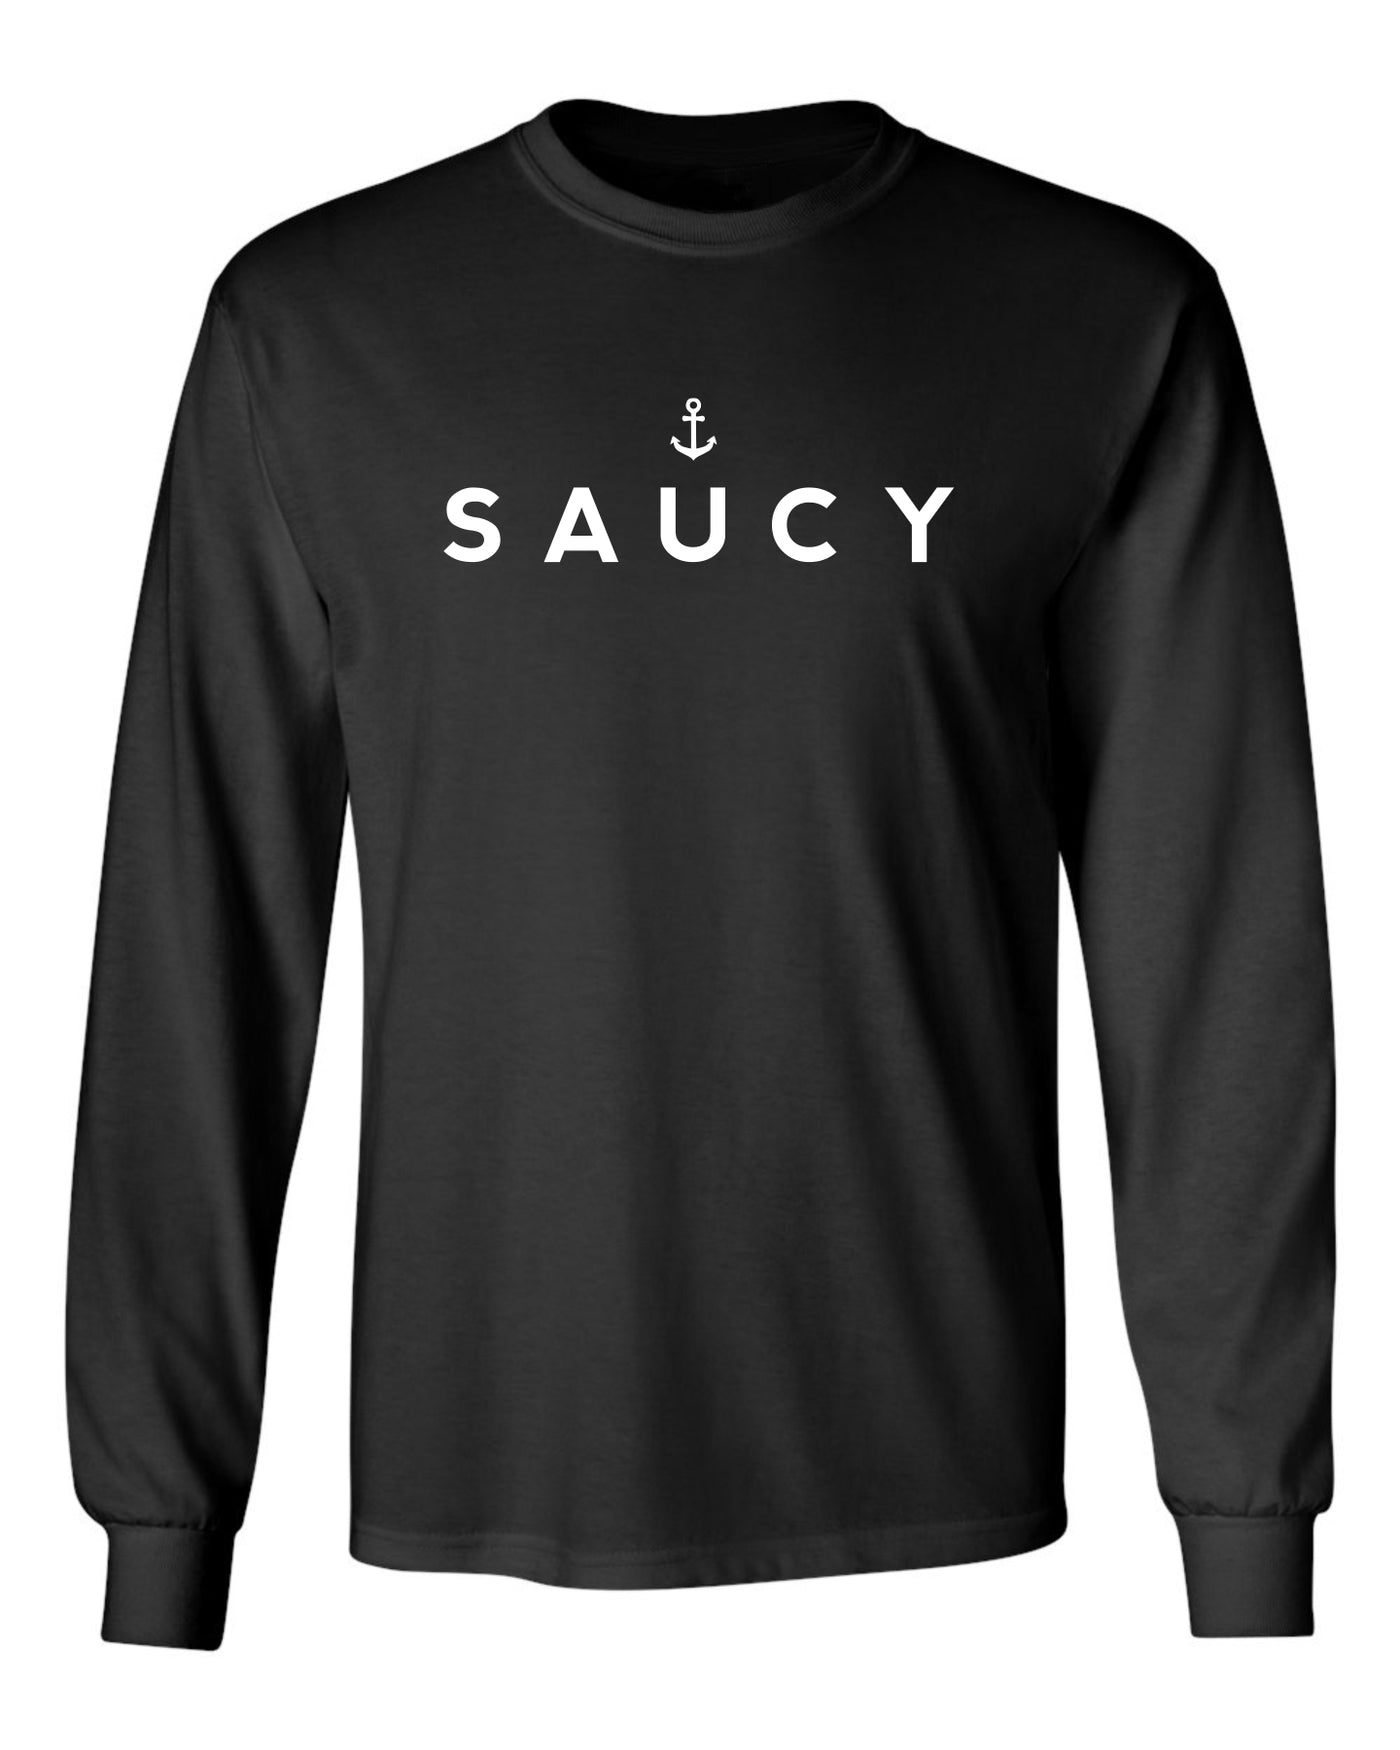 "Saucy" Unisex Long Sleeve Shirt